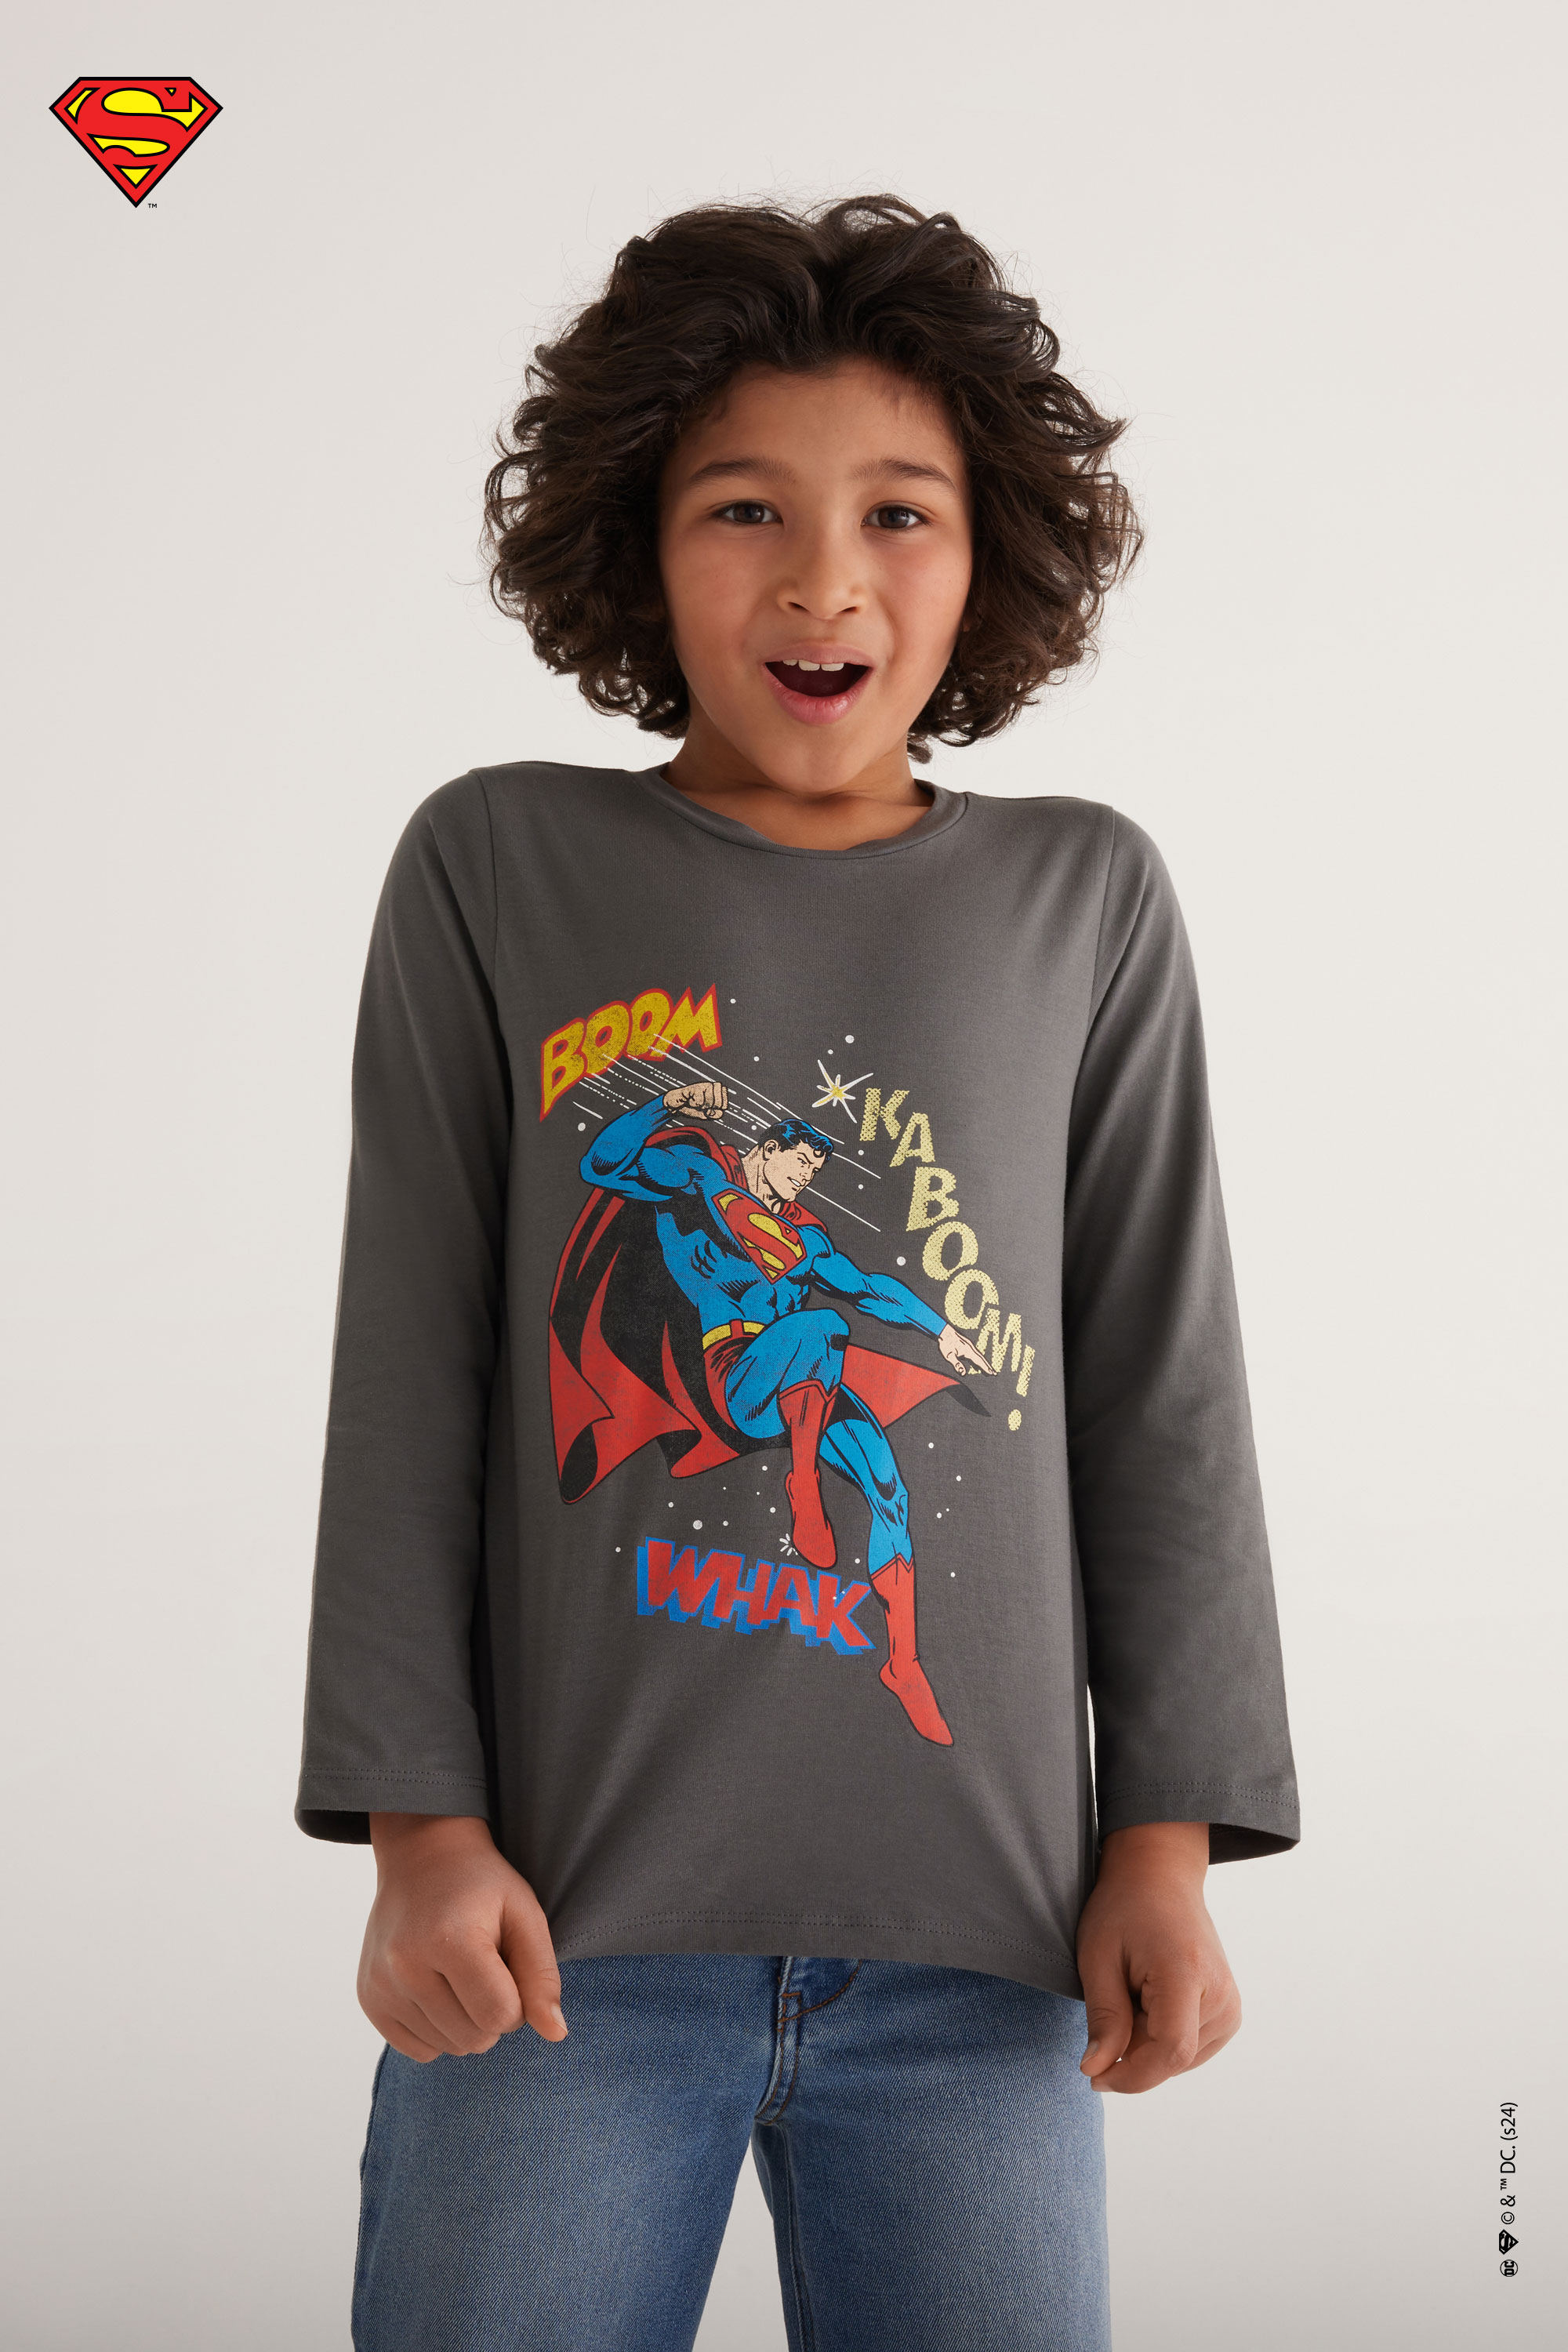 Camisola Manga Comprida Decote Redondo Estampado Superman Menino